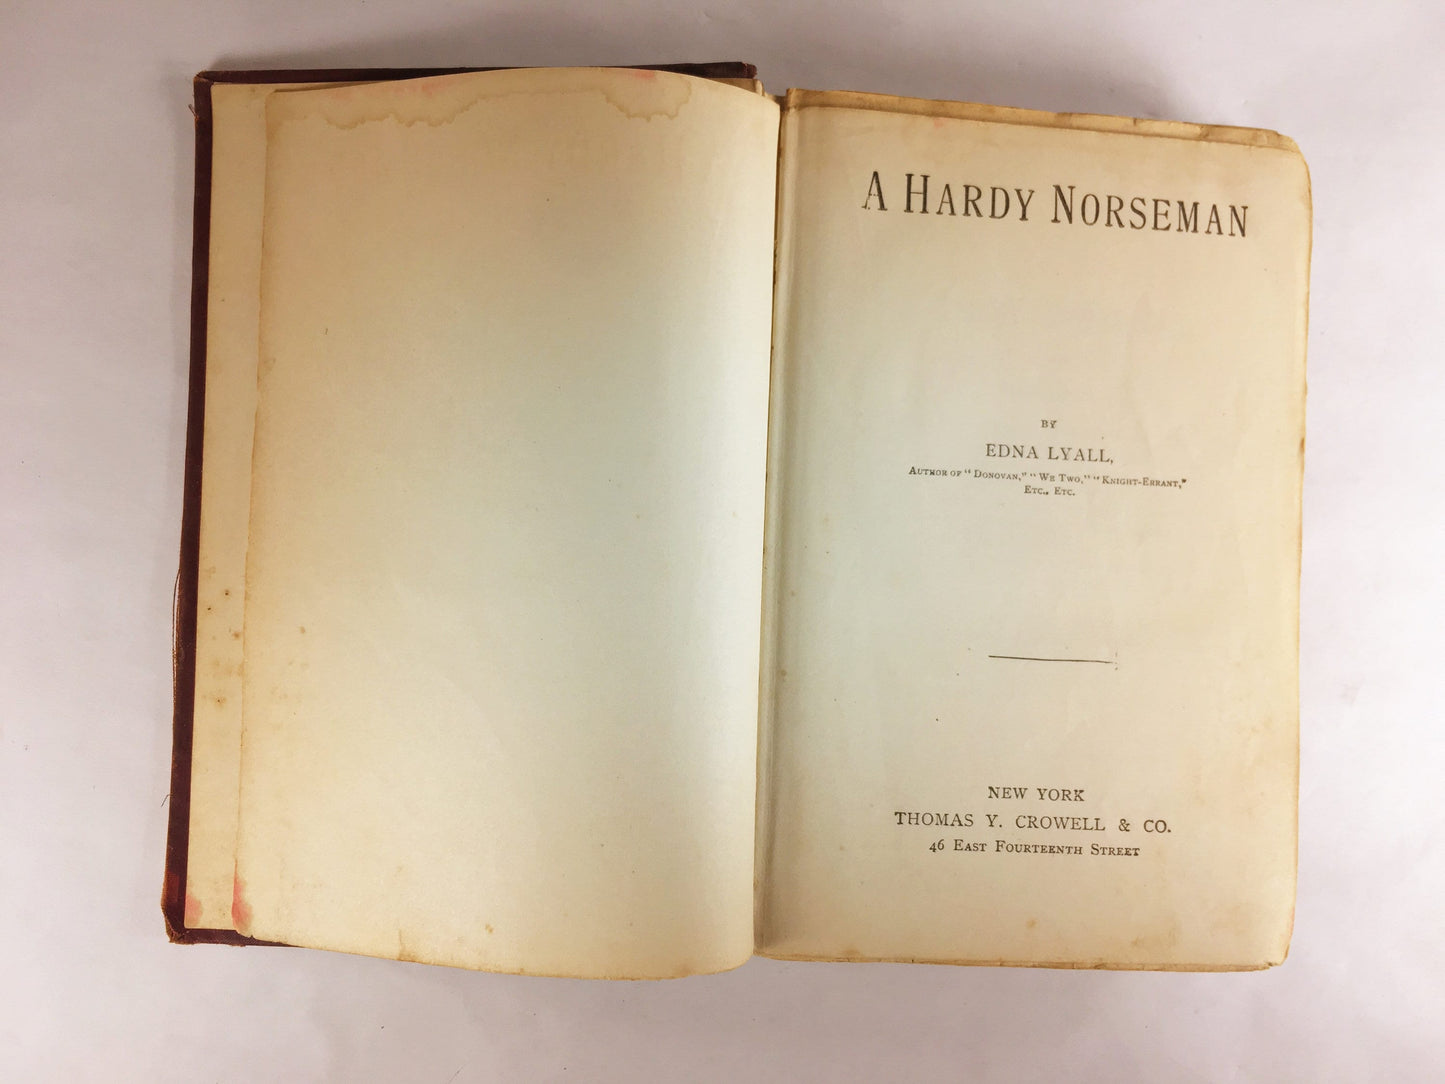 1890 A Hardy Norseman by Edna Lyall aka Ada Ellen Bayly. ANTIQUE reddish brown & gold book vintage Prop staging bookshelf decor.